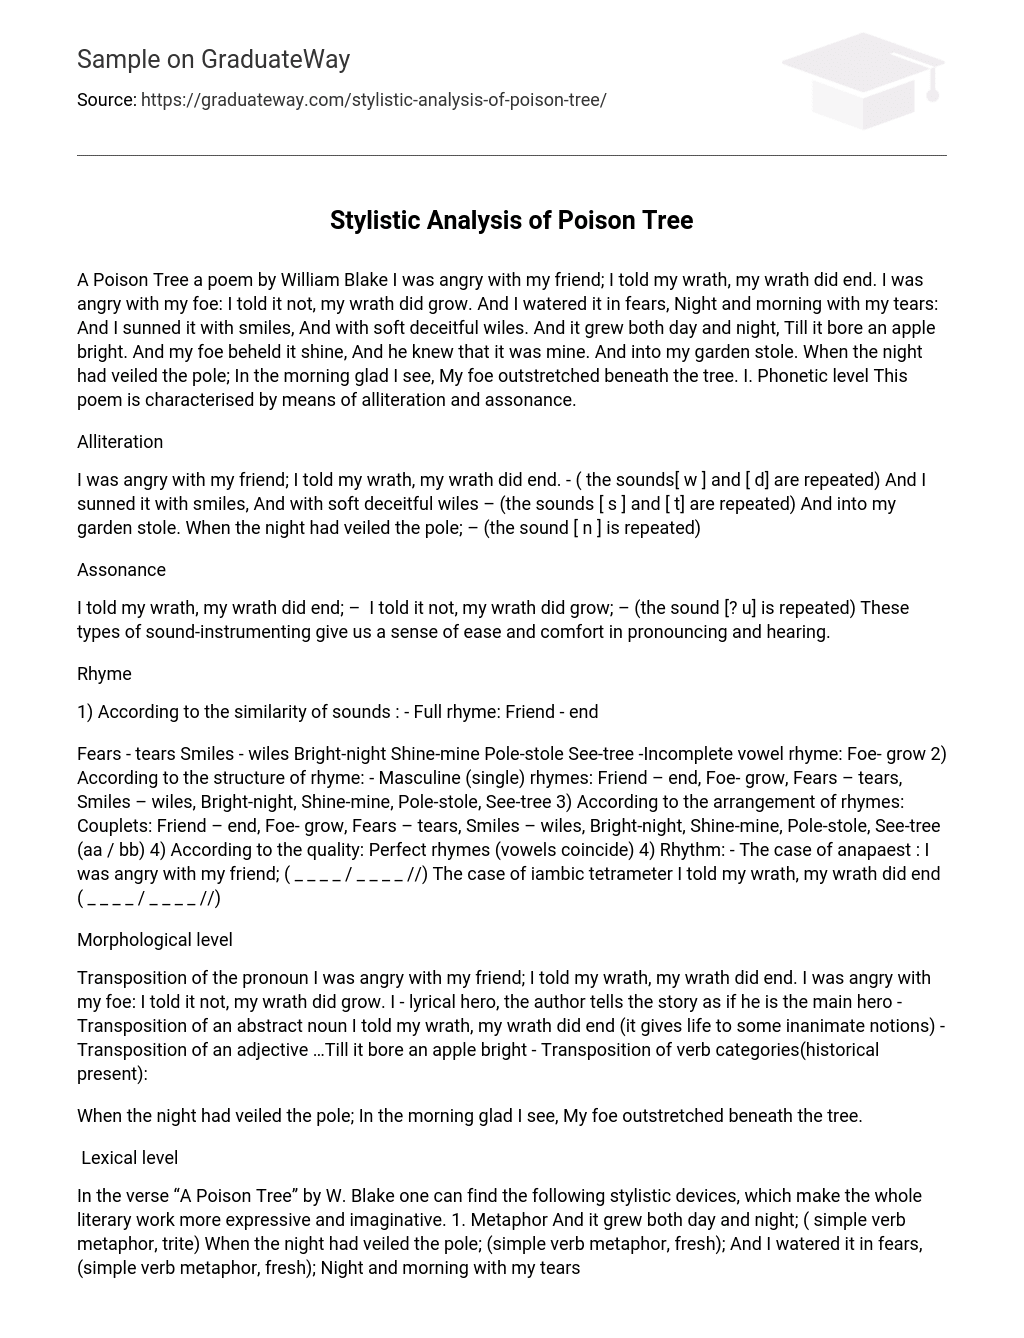 Stylistic Analysis of Poison Tree